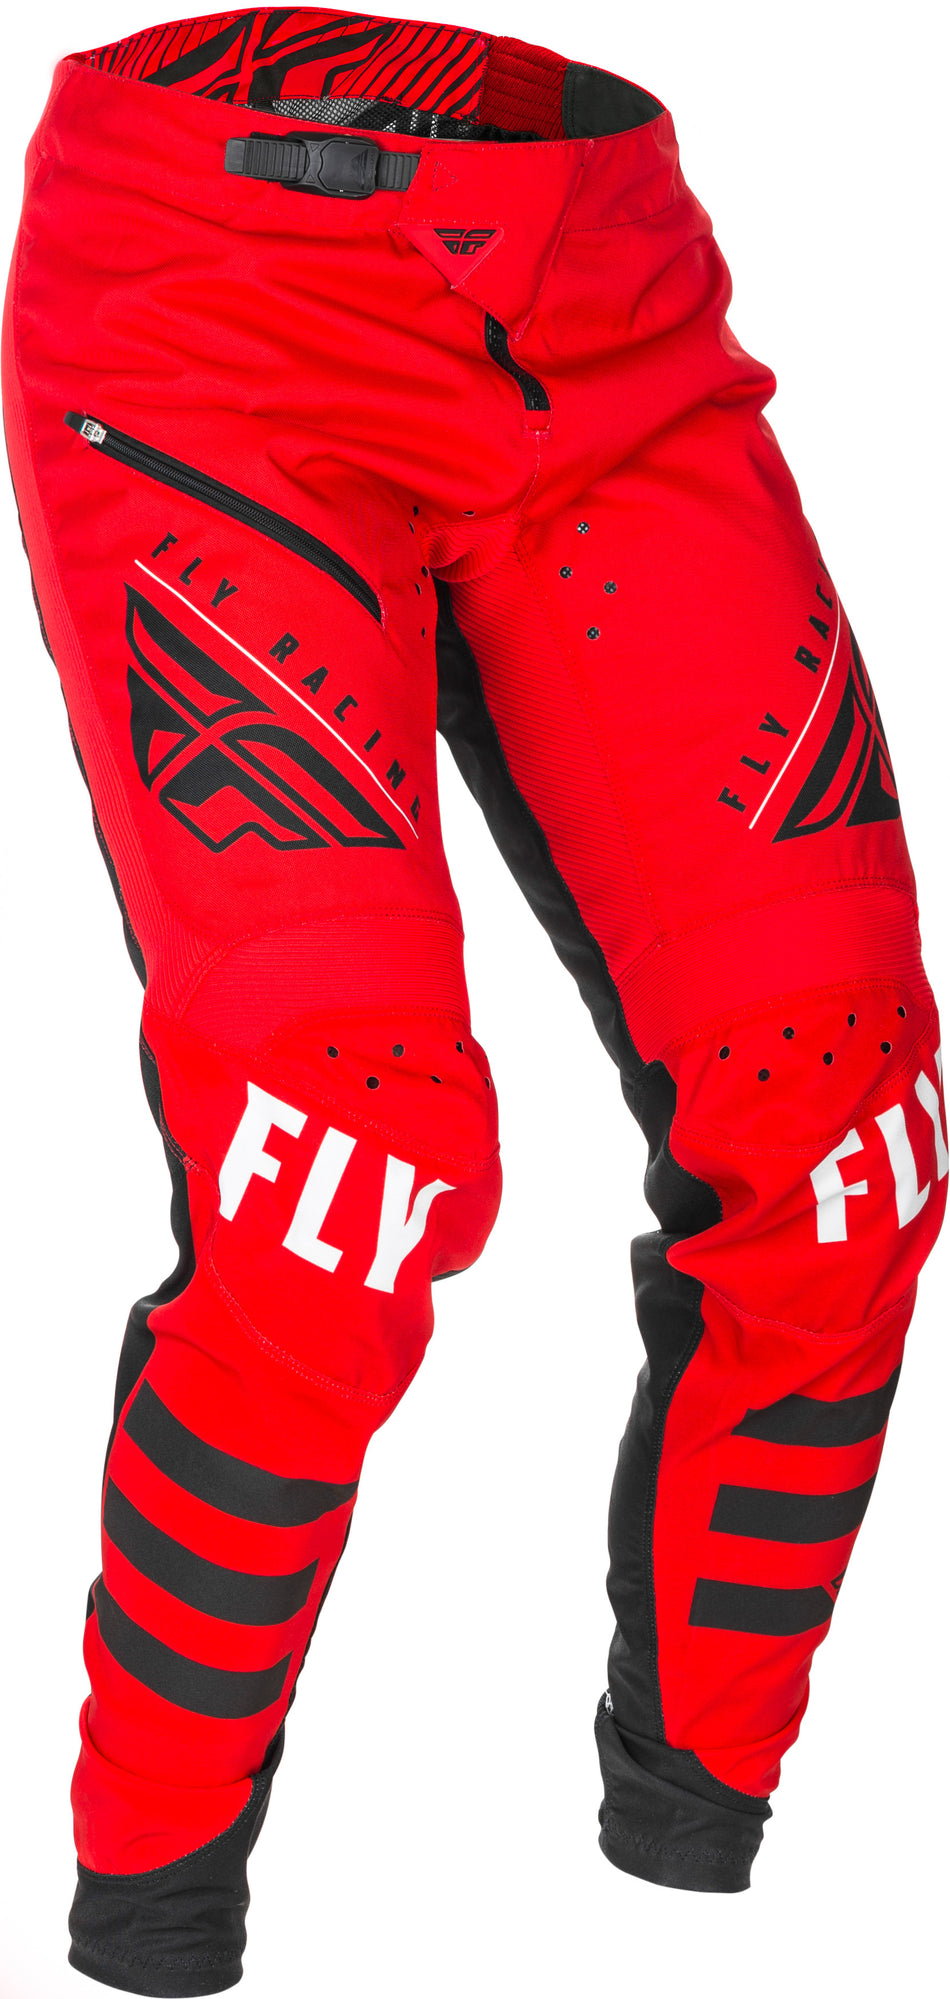 FLY RACING Kinetic Bicycle Pants Red/Black Sz 36 373-04236